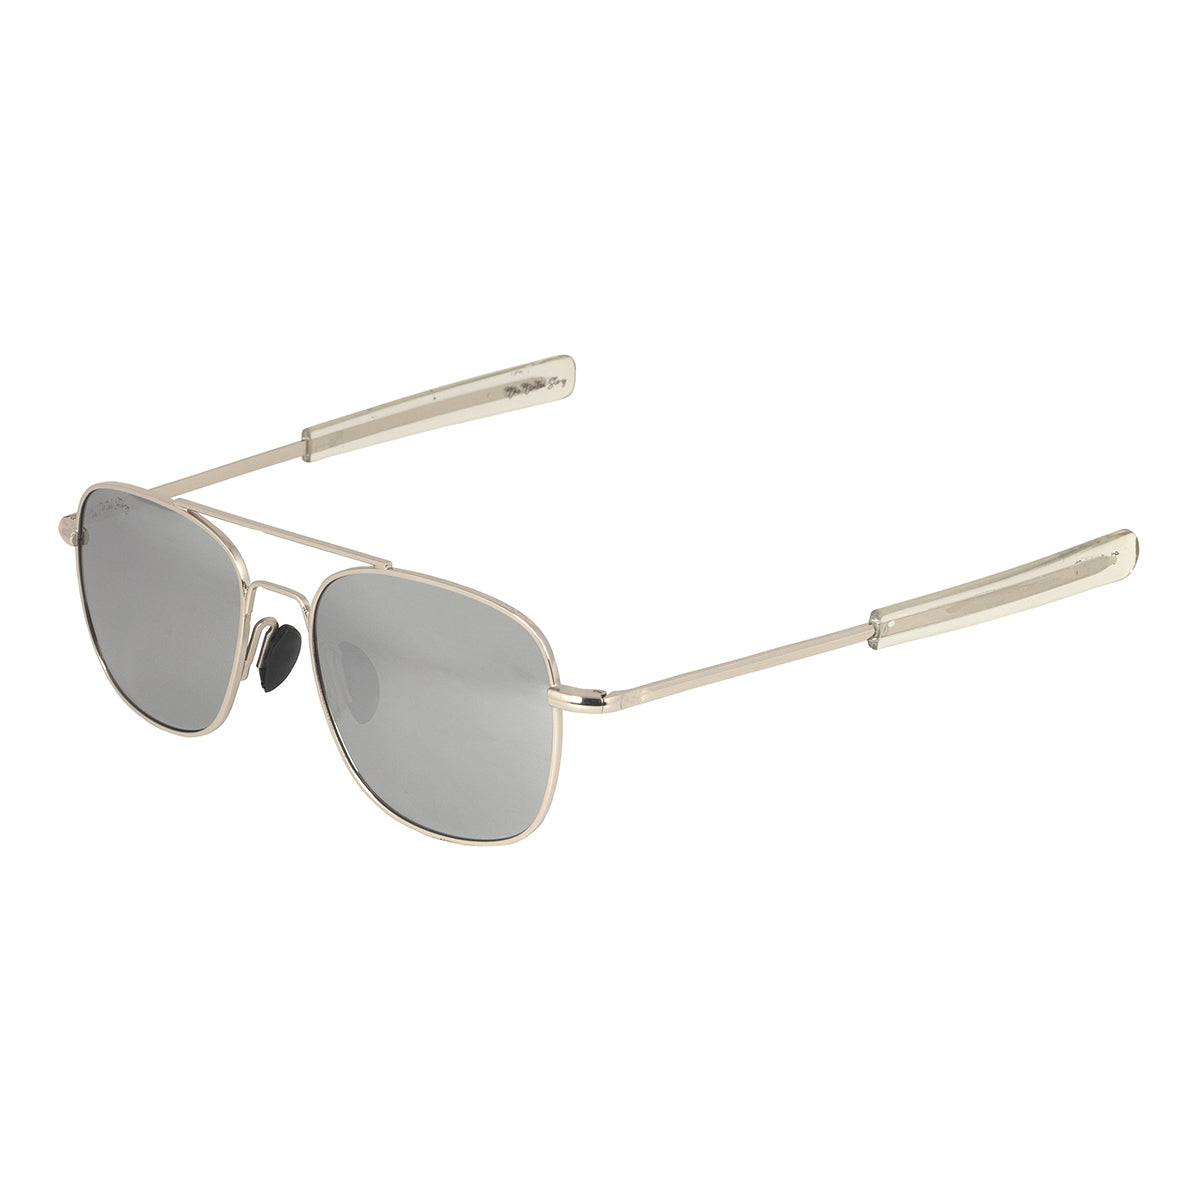 Royce Aviator Sunglasses